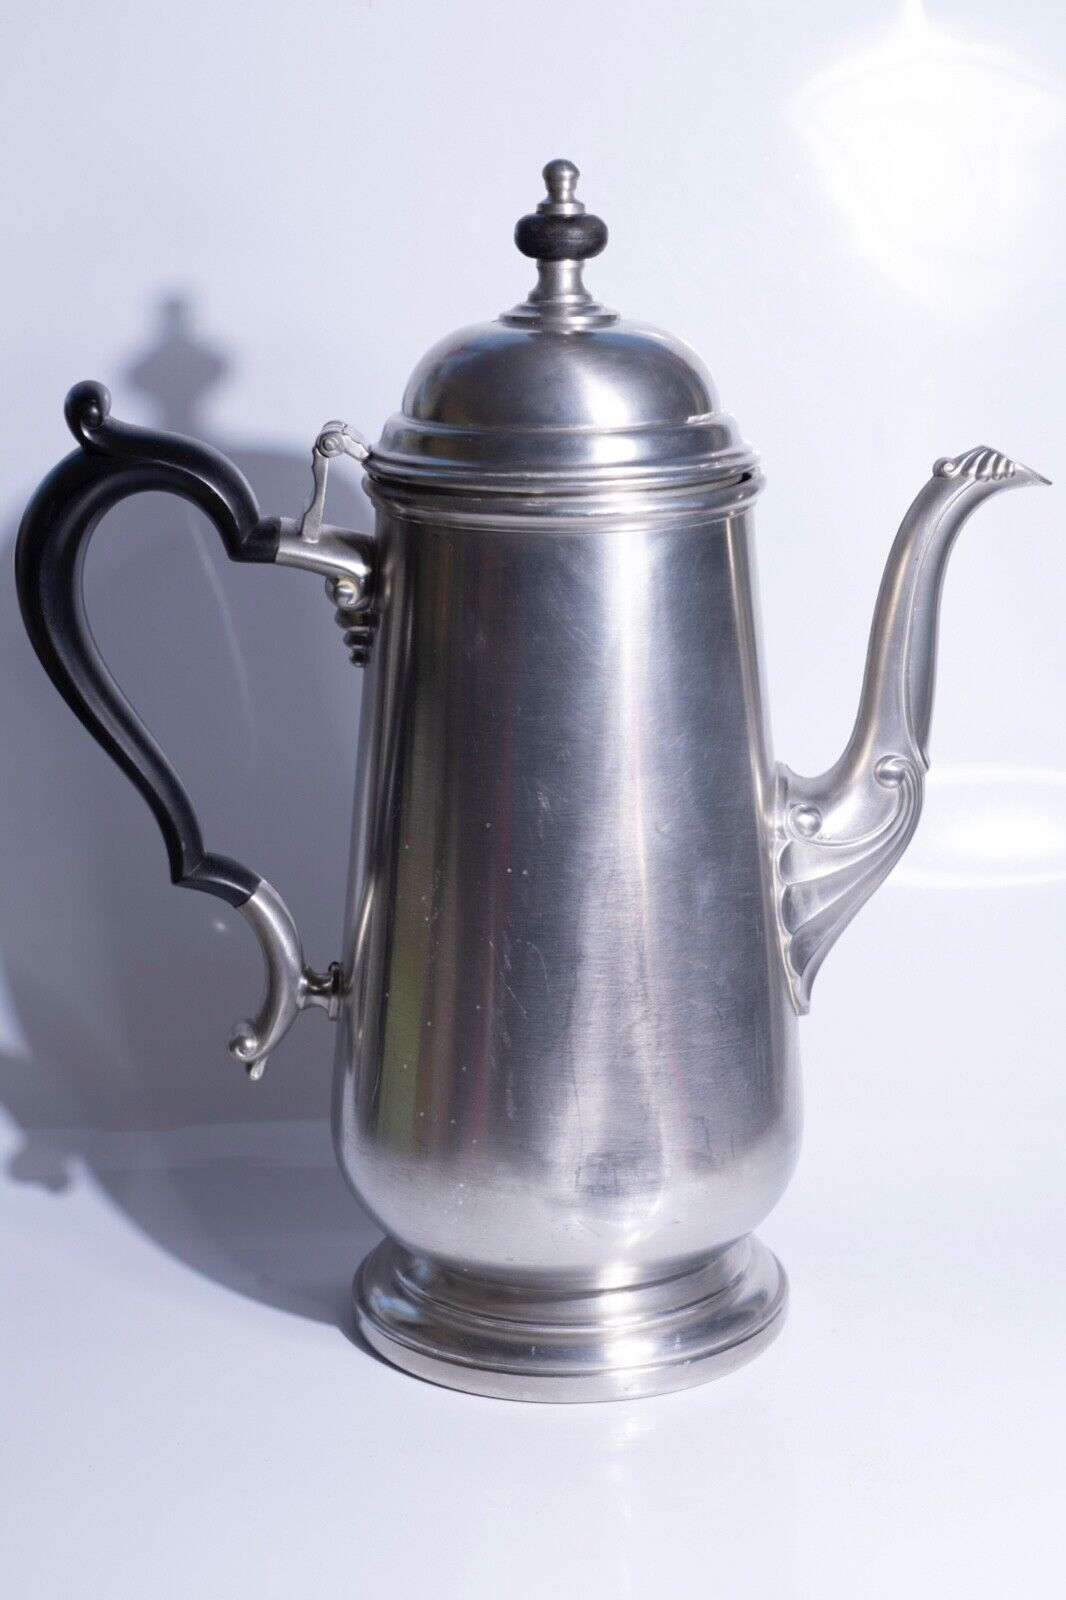 VTG Oneida Heirloom Pewter Set Teapot Black Bakelite Handle, Sugar Bowl, Creamer